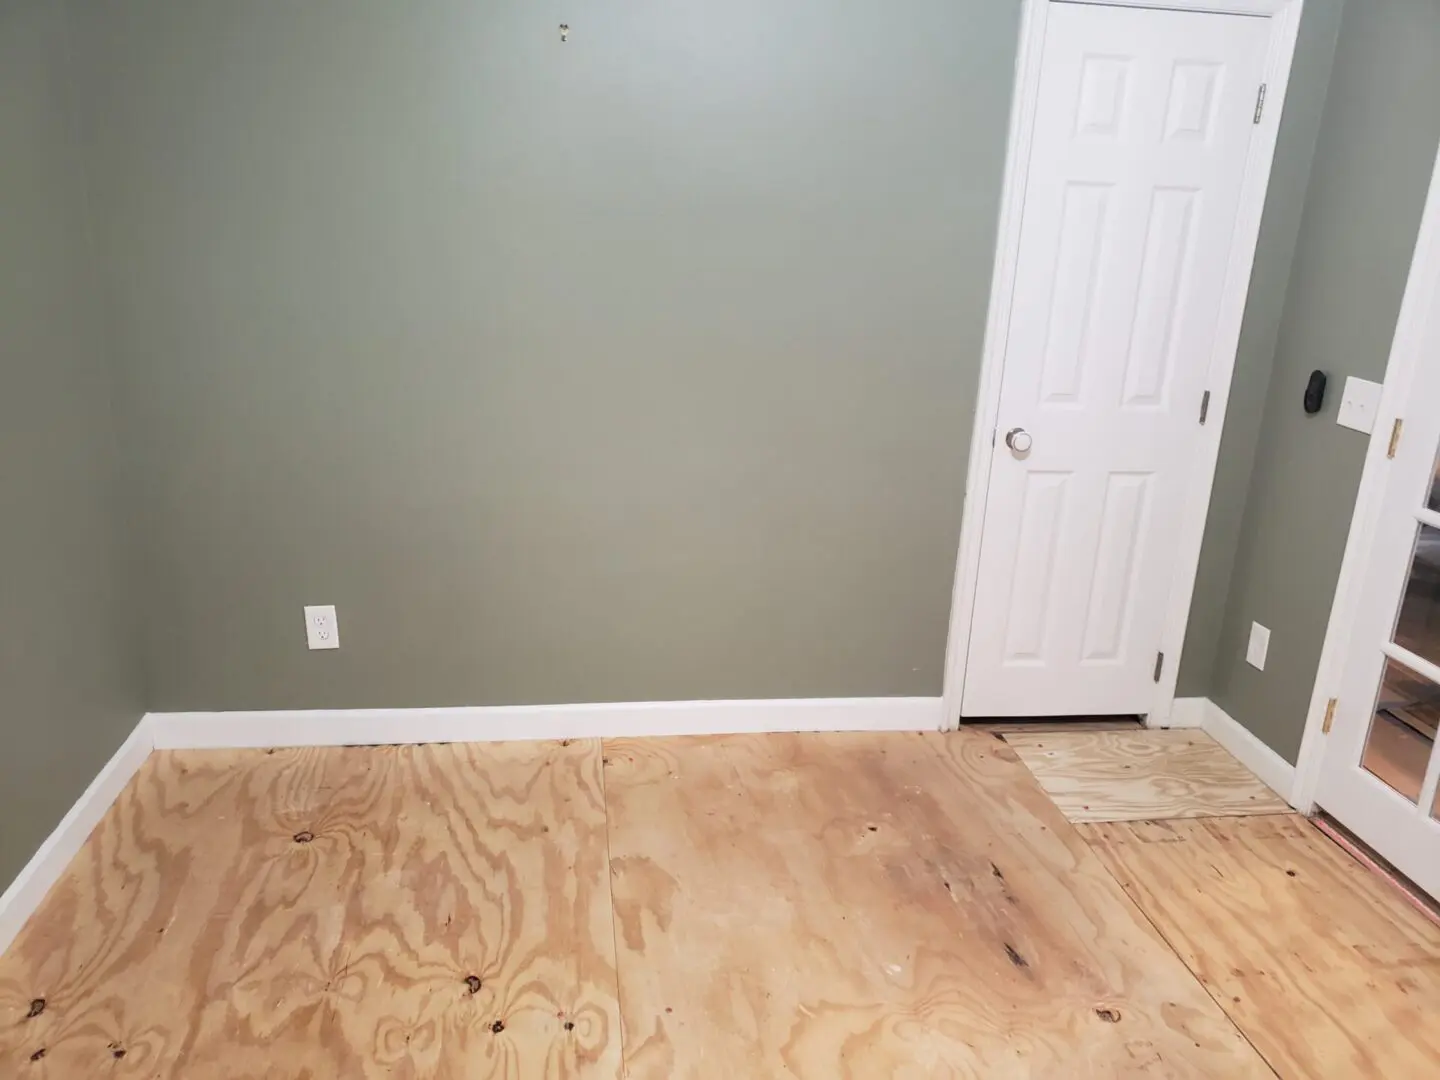 A room with a door and floor in it